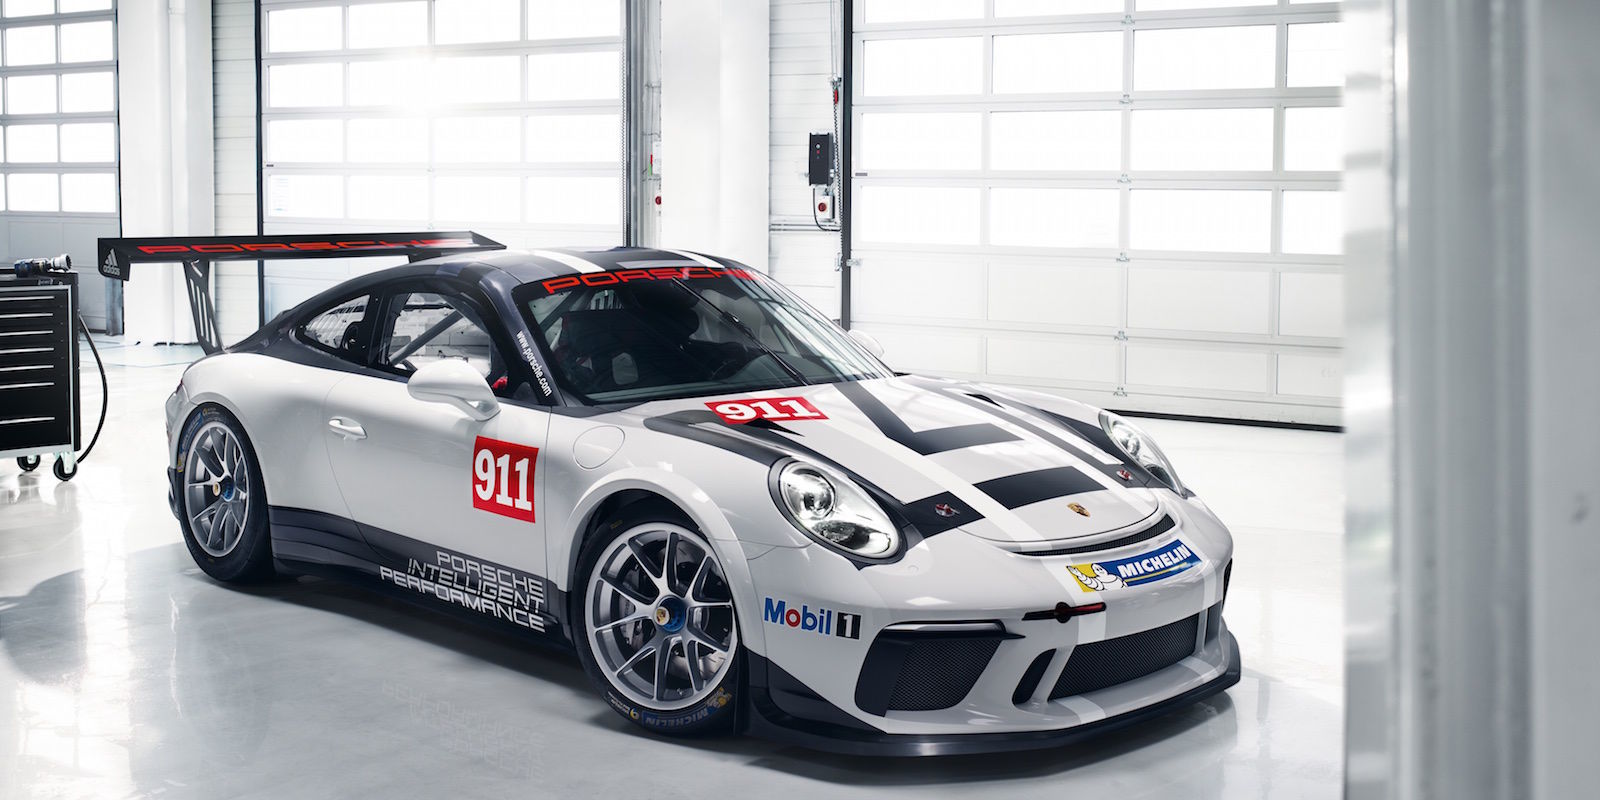 2017 Porsche 911 GT3 Cup Racecar Is a Full Motorcycle 